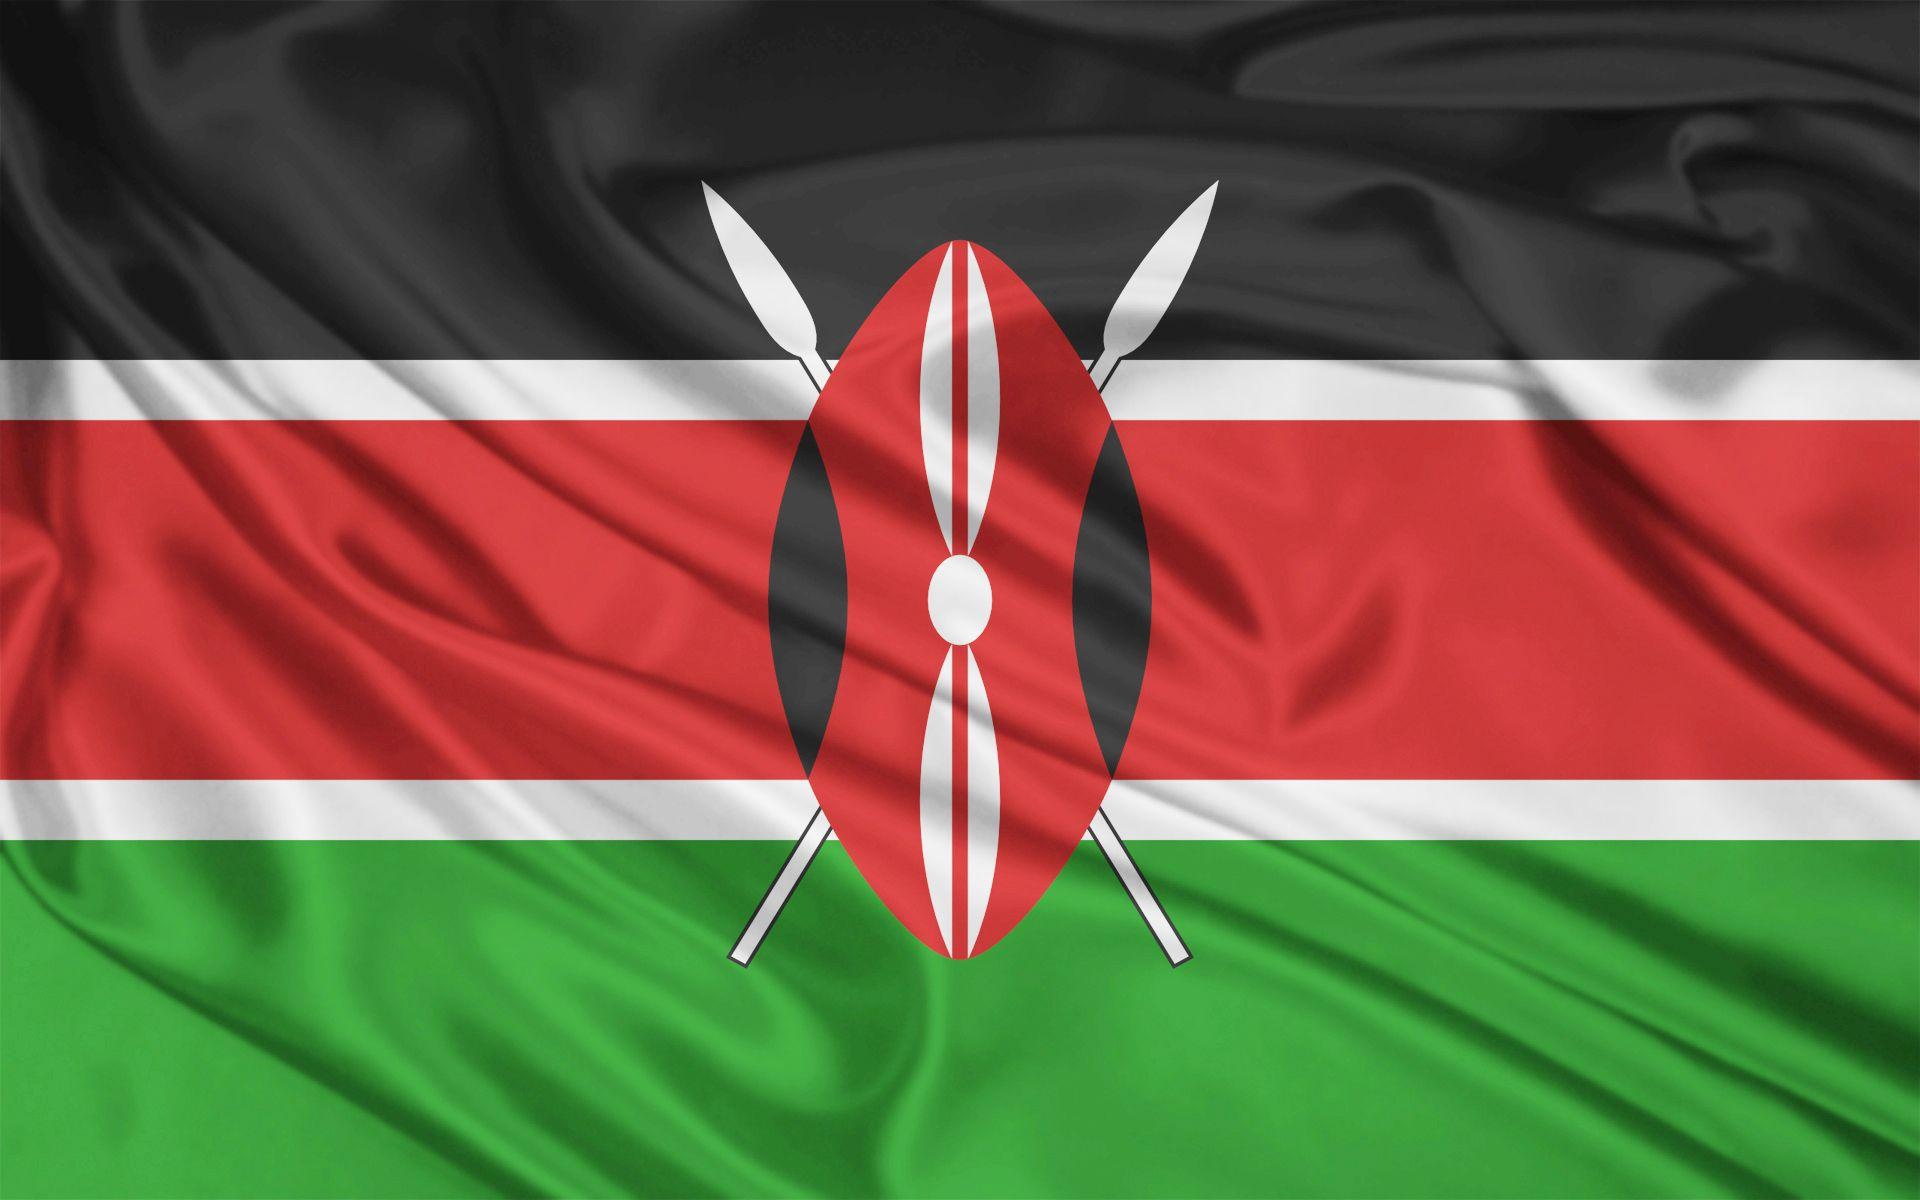 Kenya Flag wallpapers